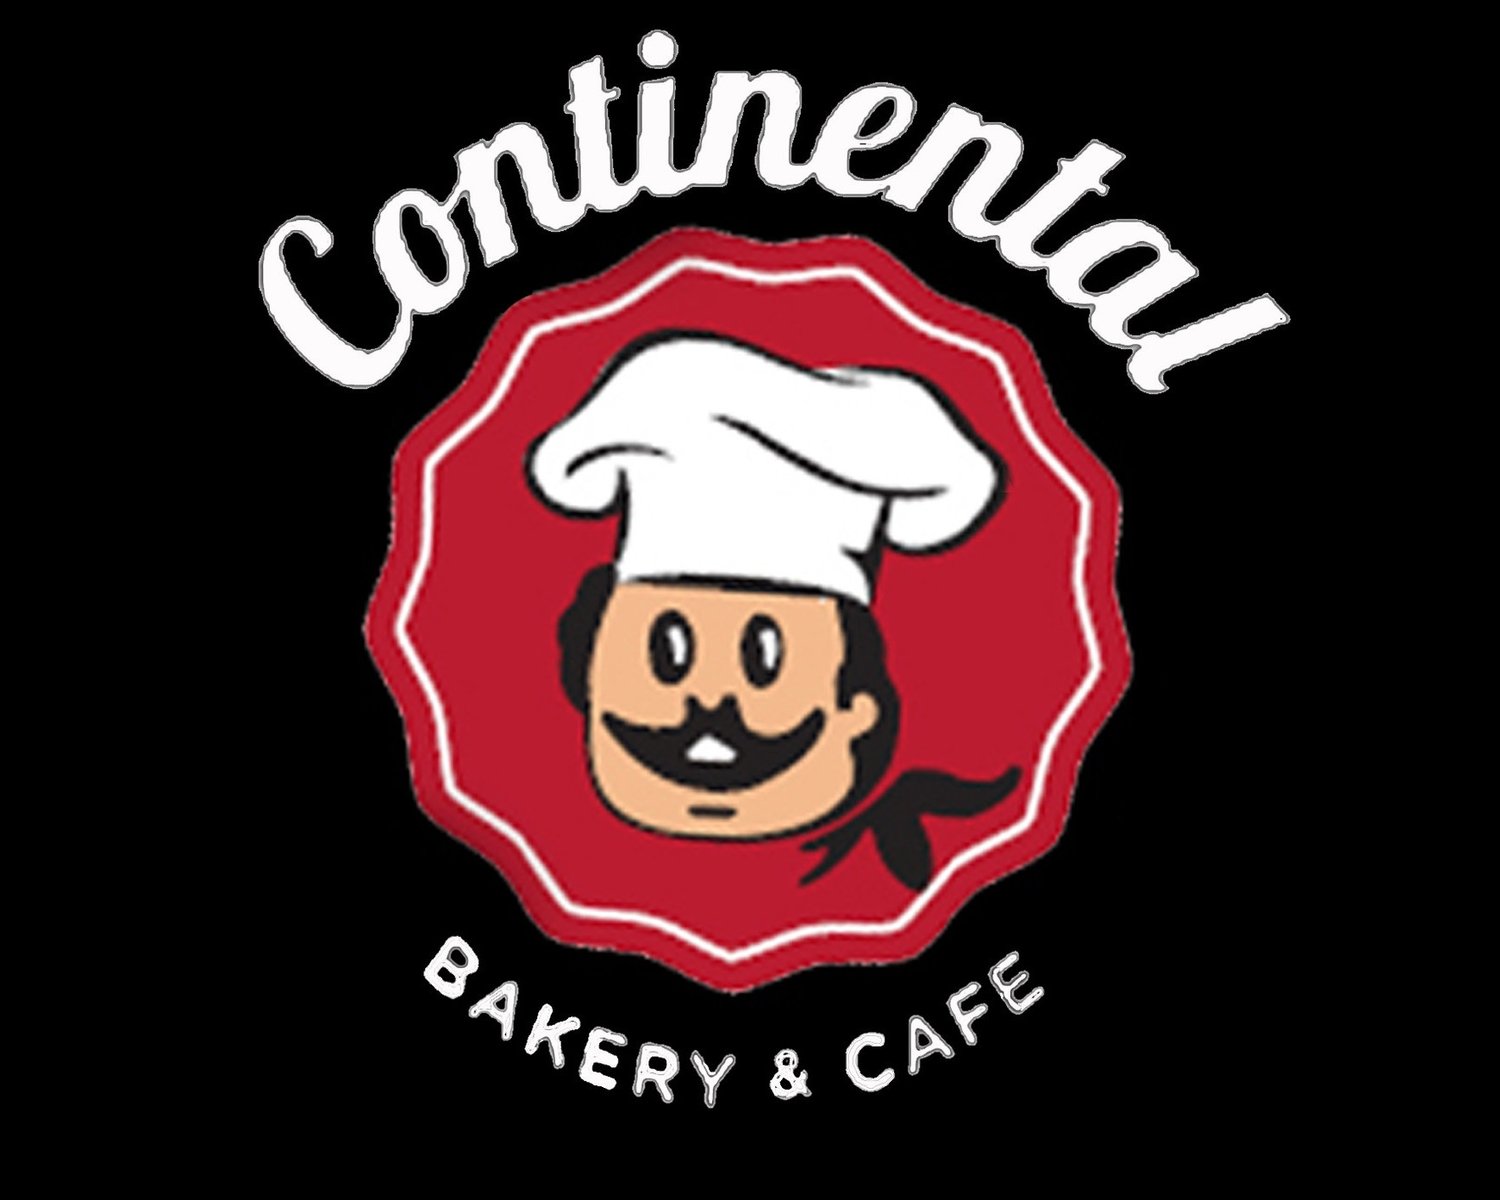 Continental Bakery